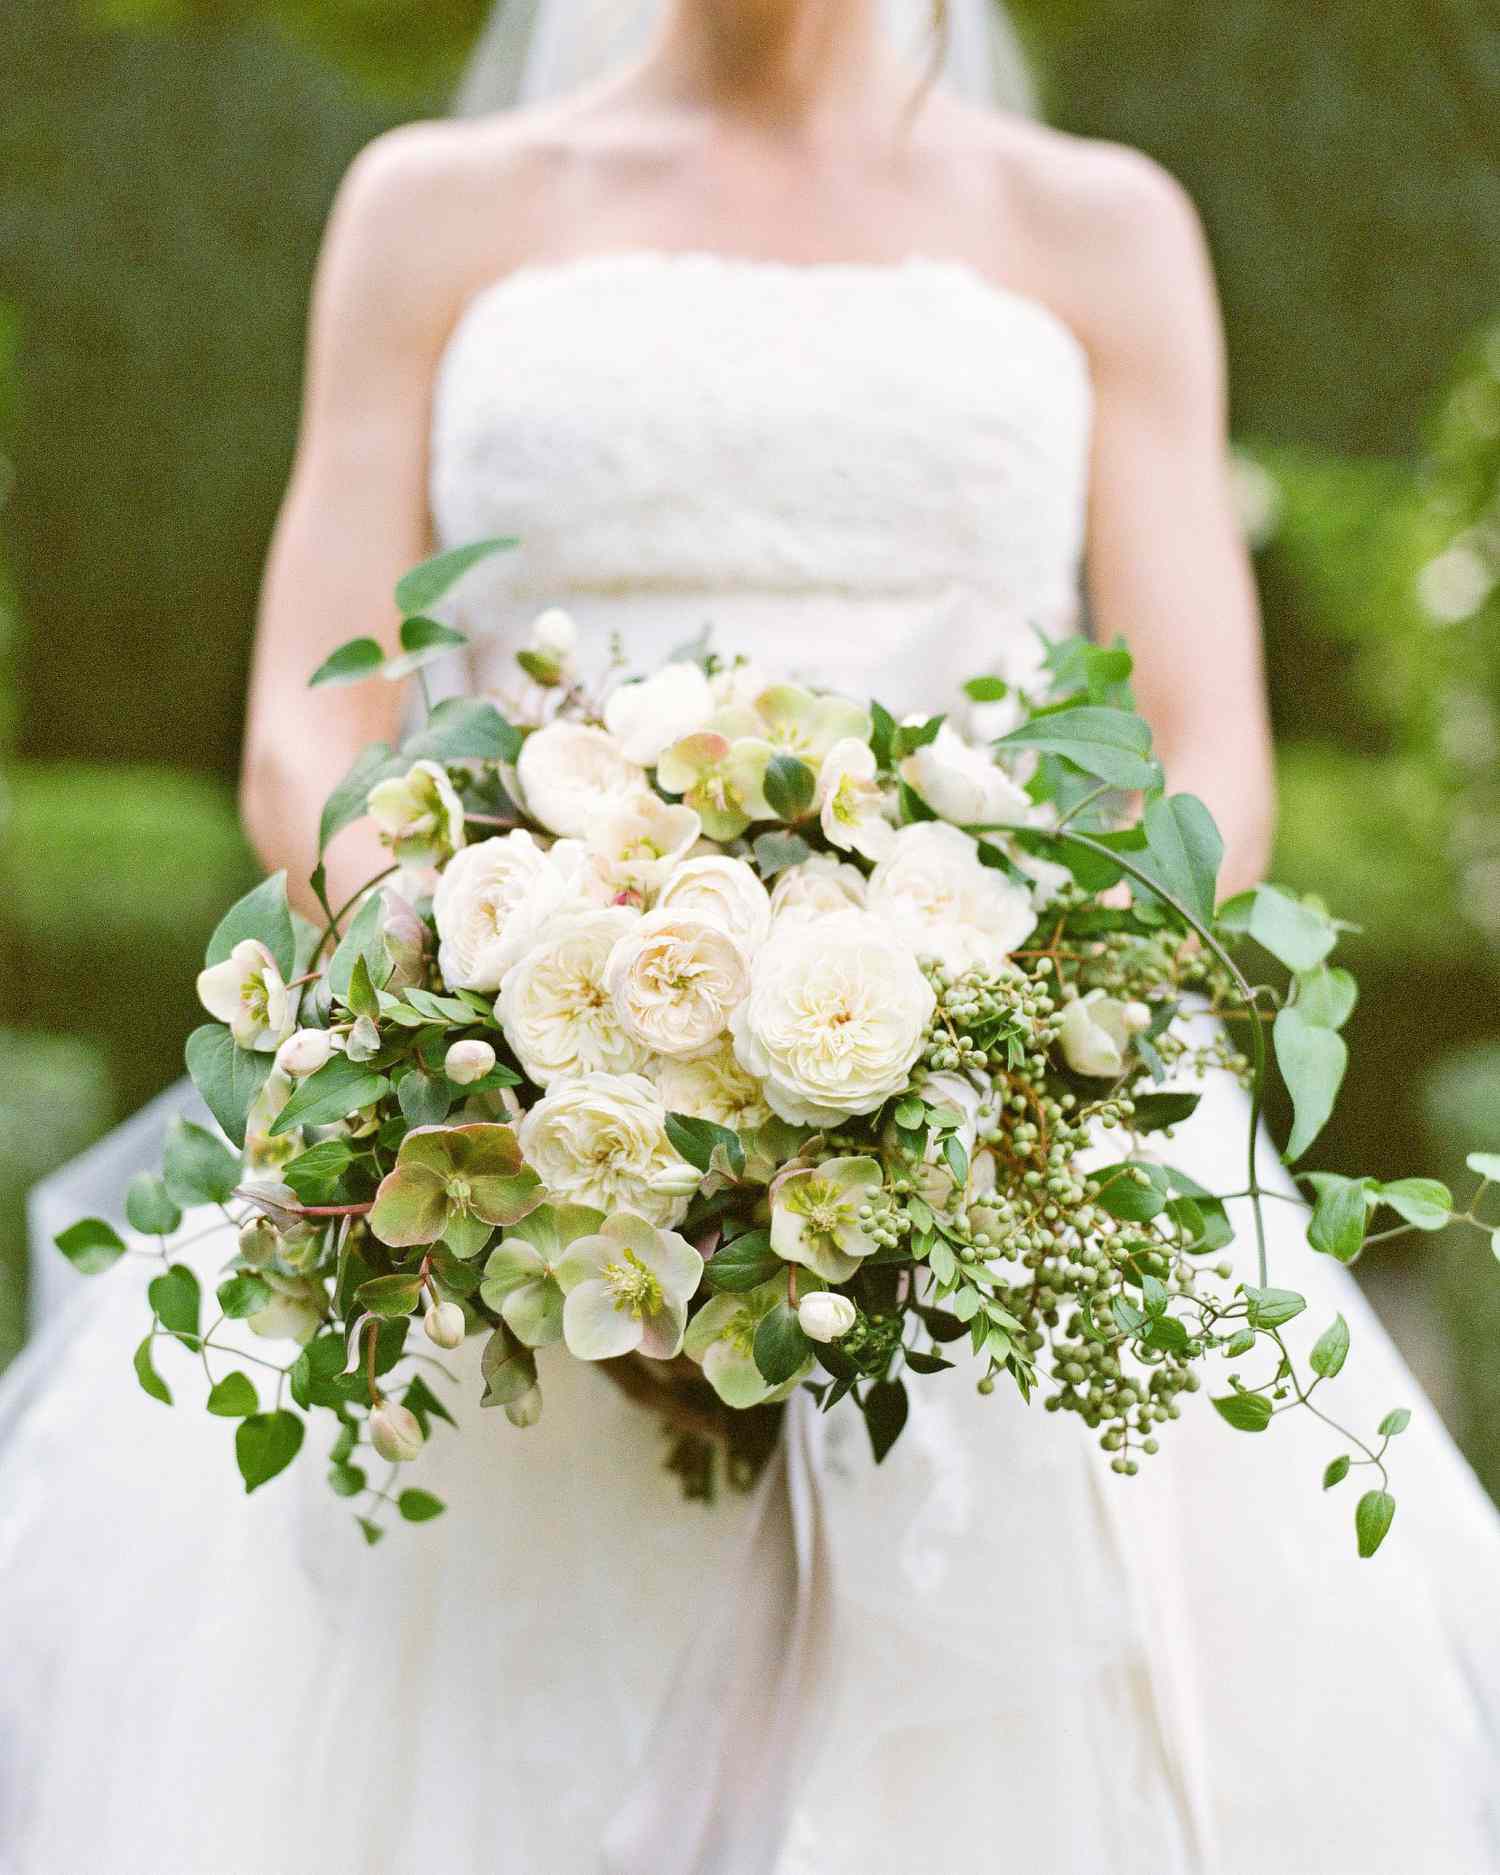 The Bride's White Bouquet